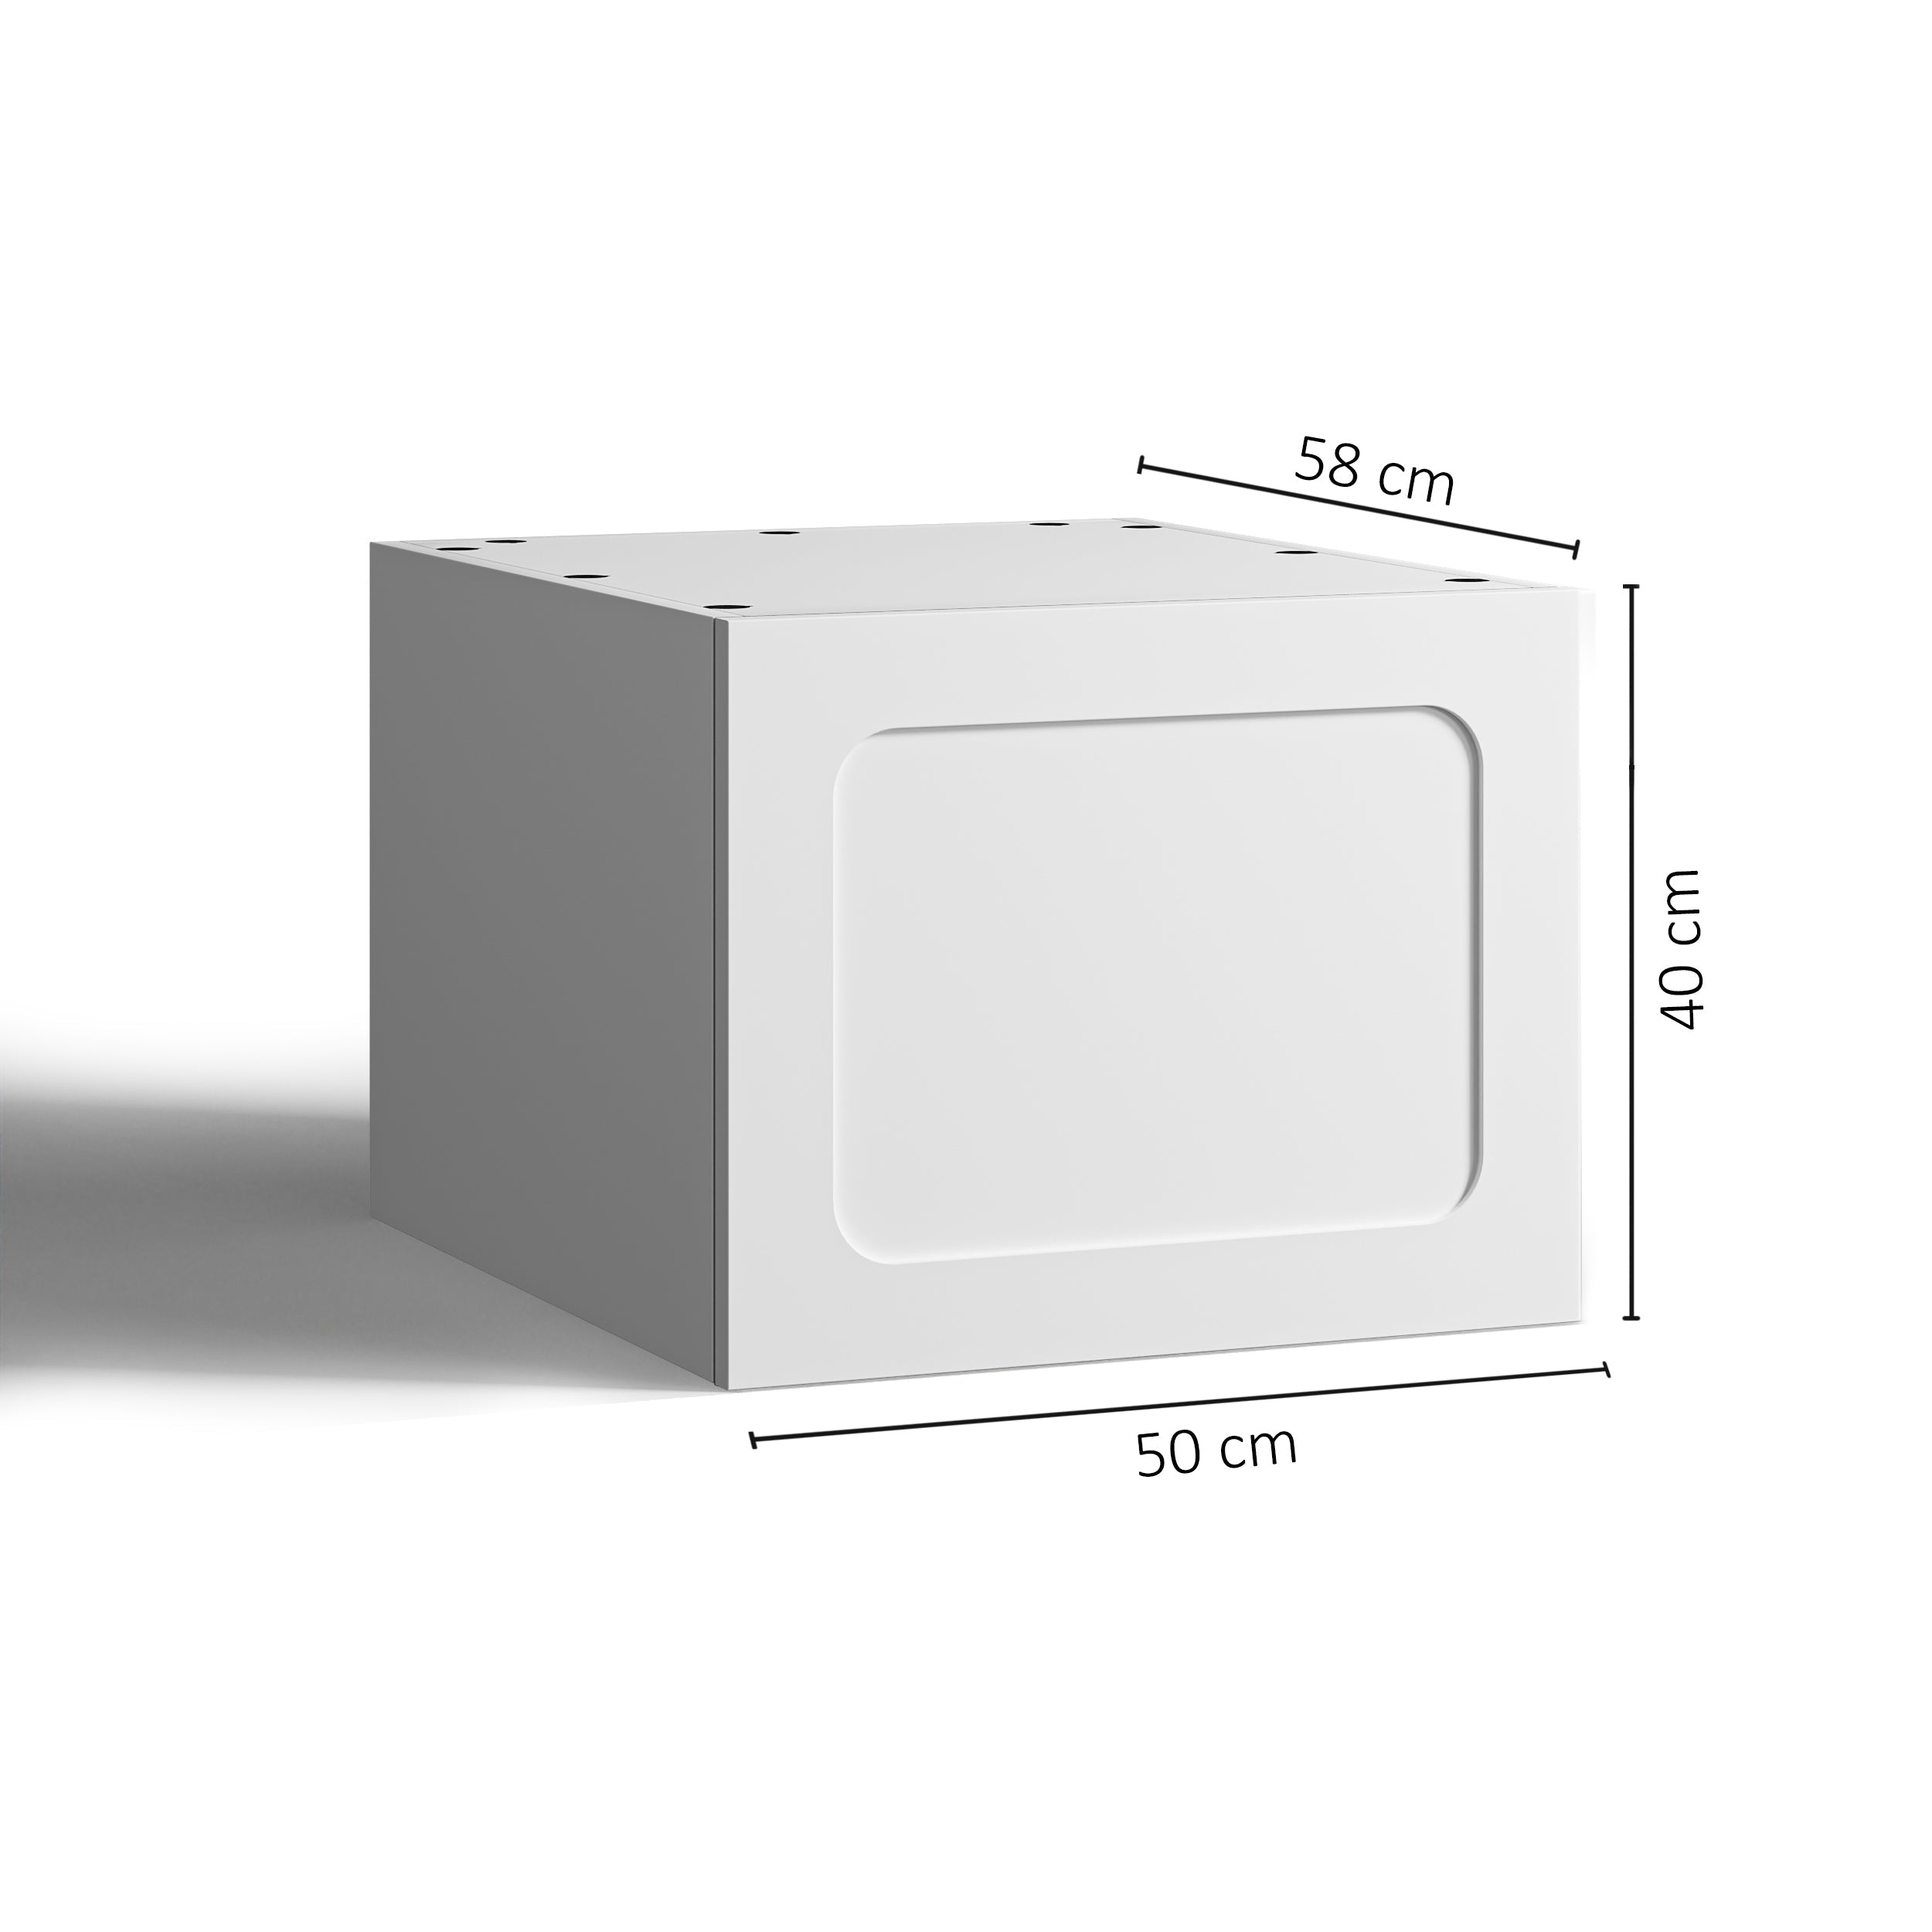 50x40 - Cabinet (58cm D) w Door - Round Shaker - RAW - PAX